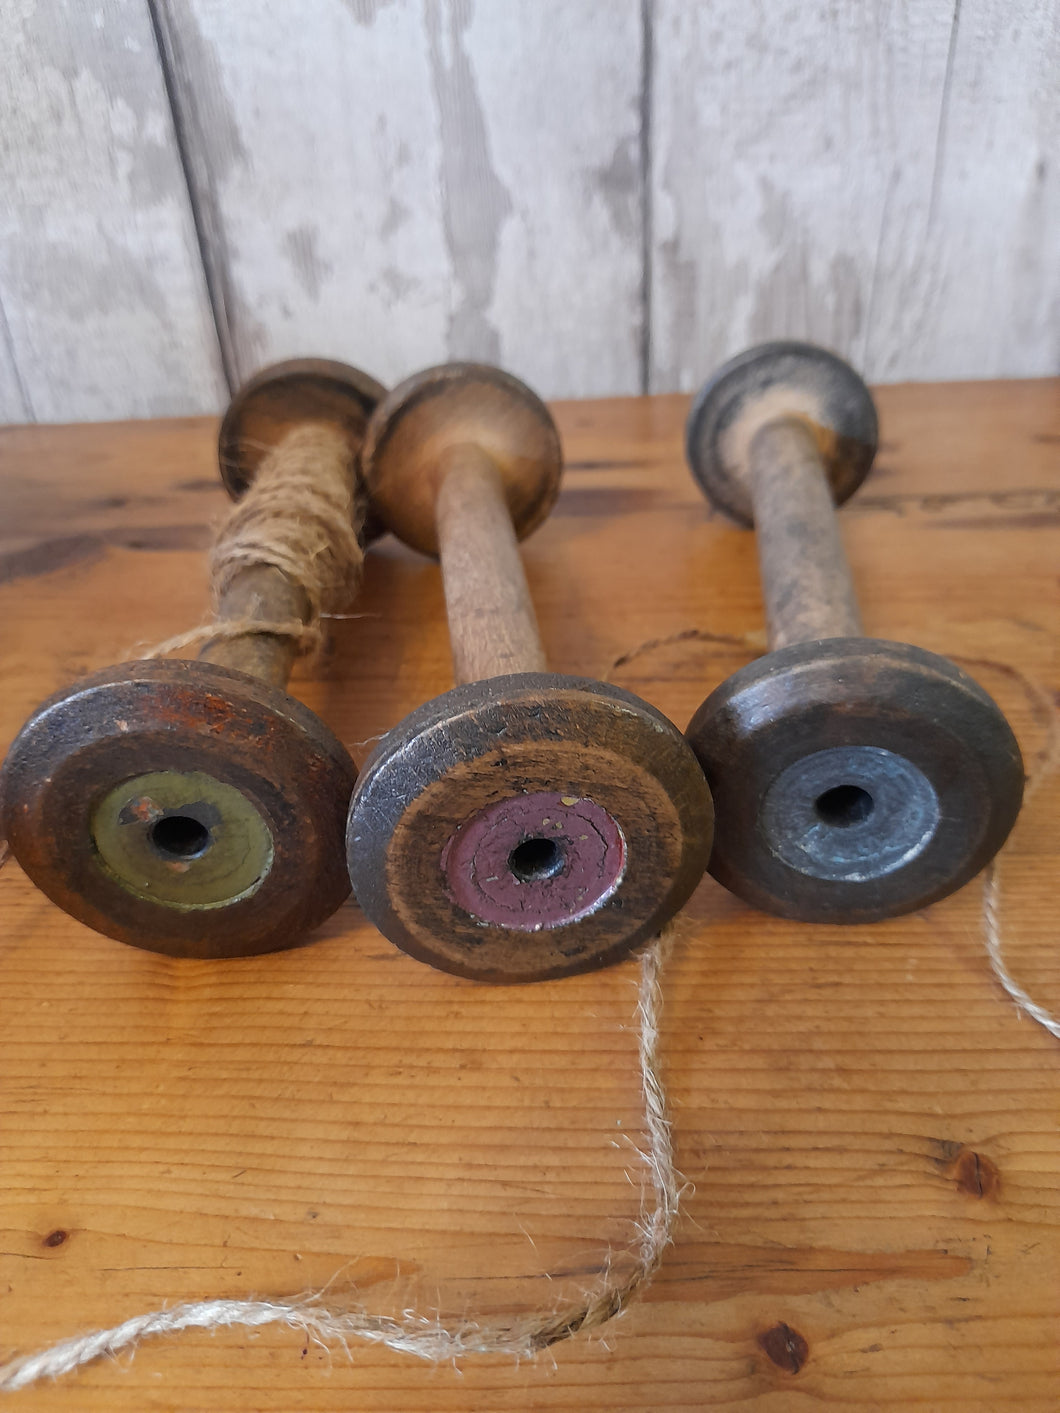 Vintage industrial textile bobbins